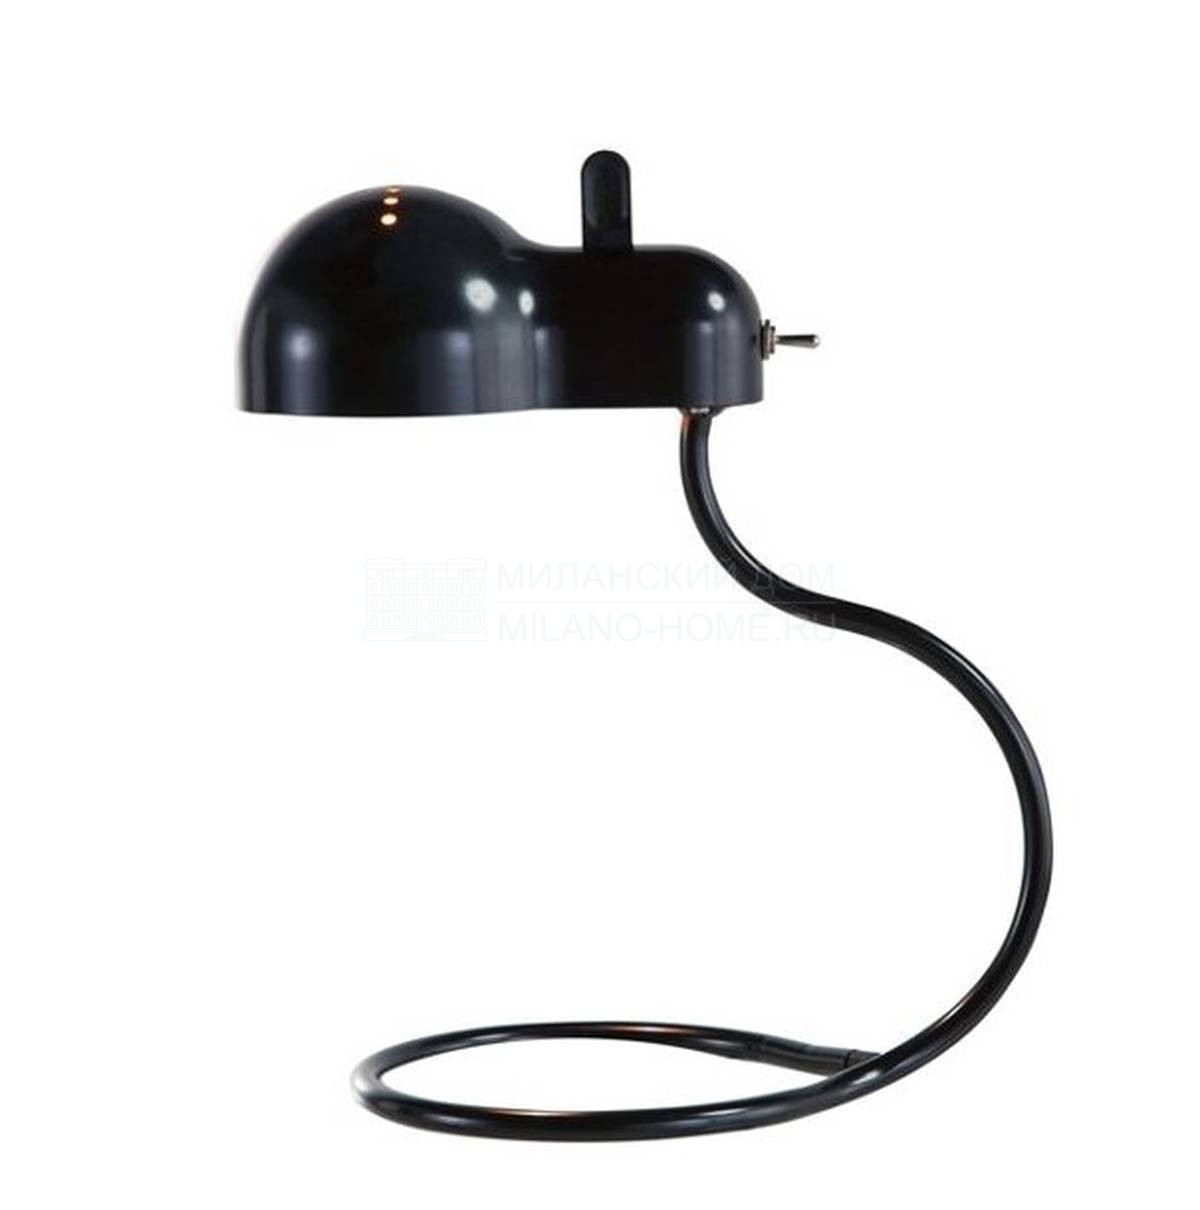 Настольная лампа Mini topo table lamp из Франции фабрики ROCHE BOBOIS